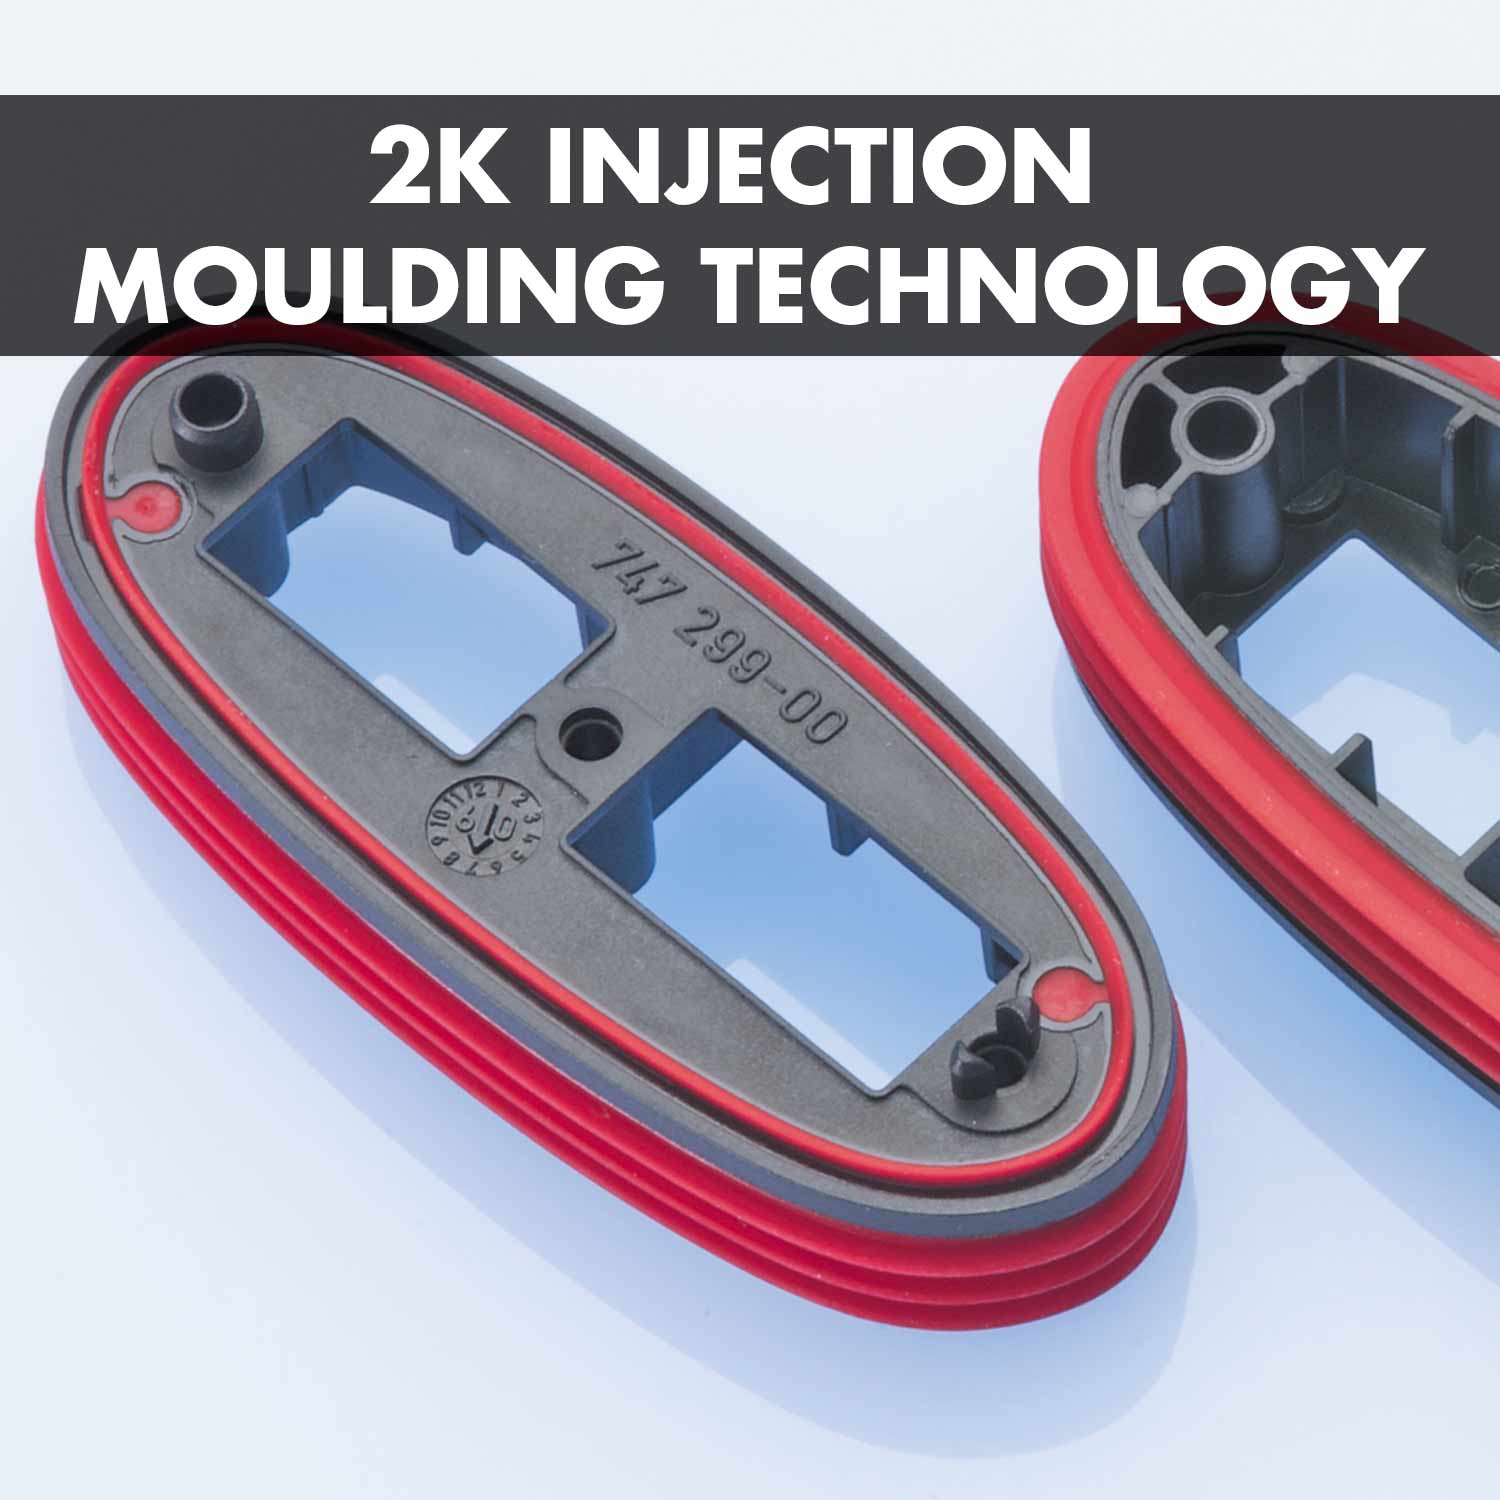 2K injection moulding technology